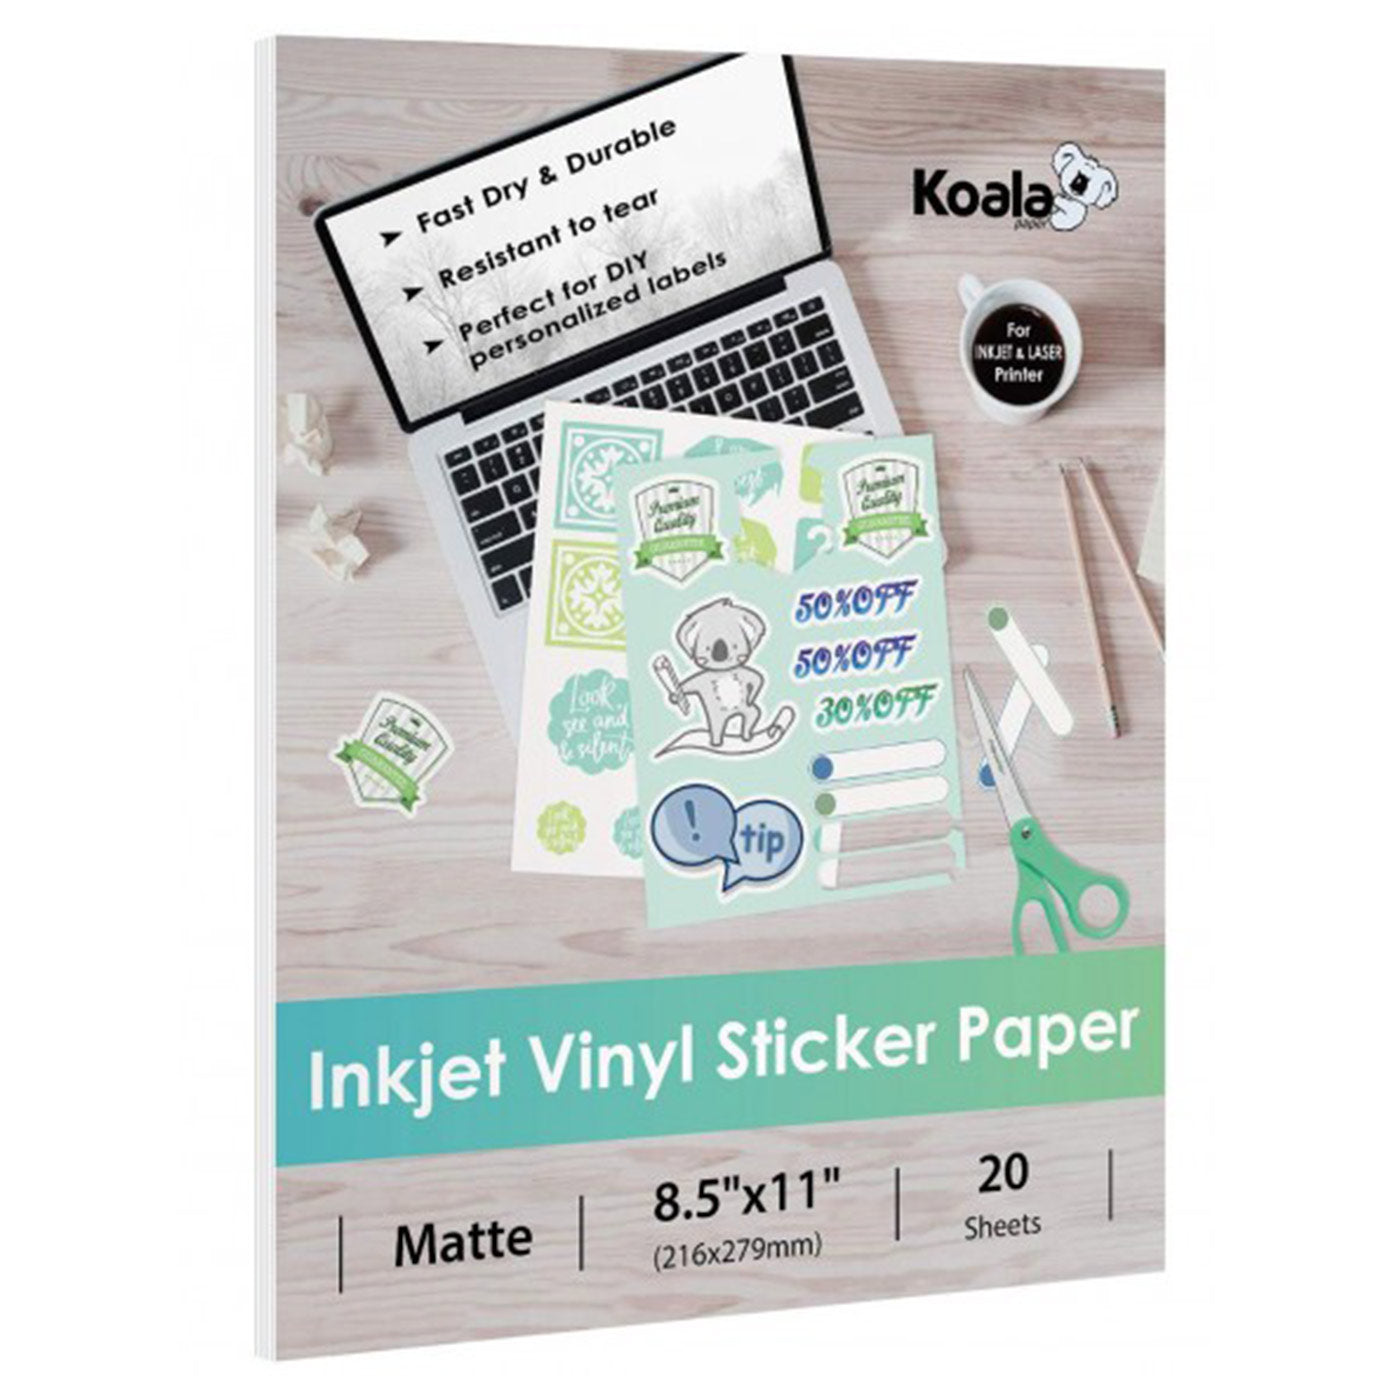 Koala Holographic Sticker Paper Inkjet Printer Cricut Waterproof